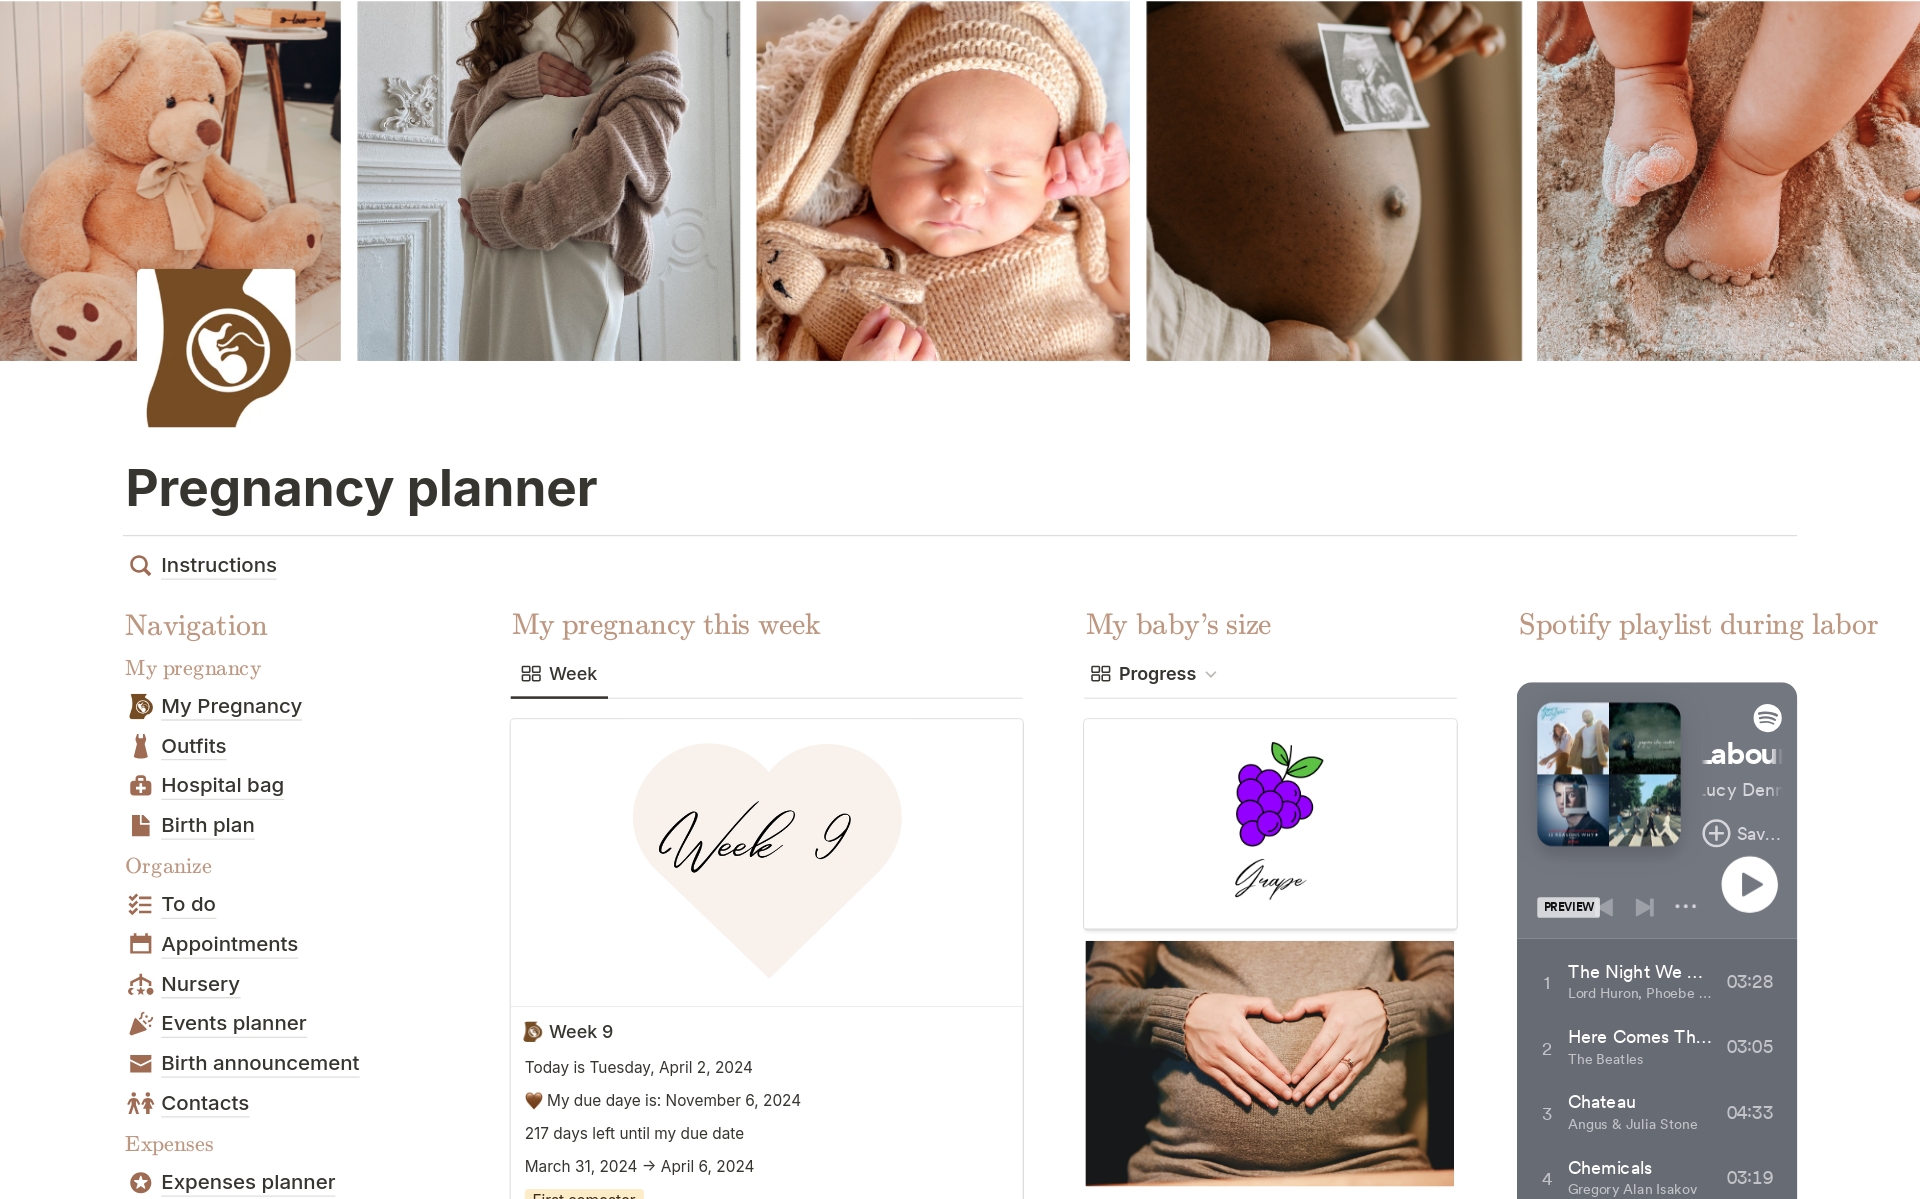 Pregnancy planner notion template, digital pregnancy journal & nursery, maternity outfit, baby registry, hospital bag, birth planning,